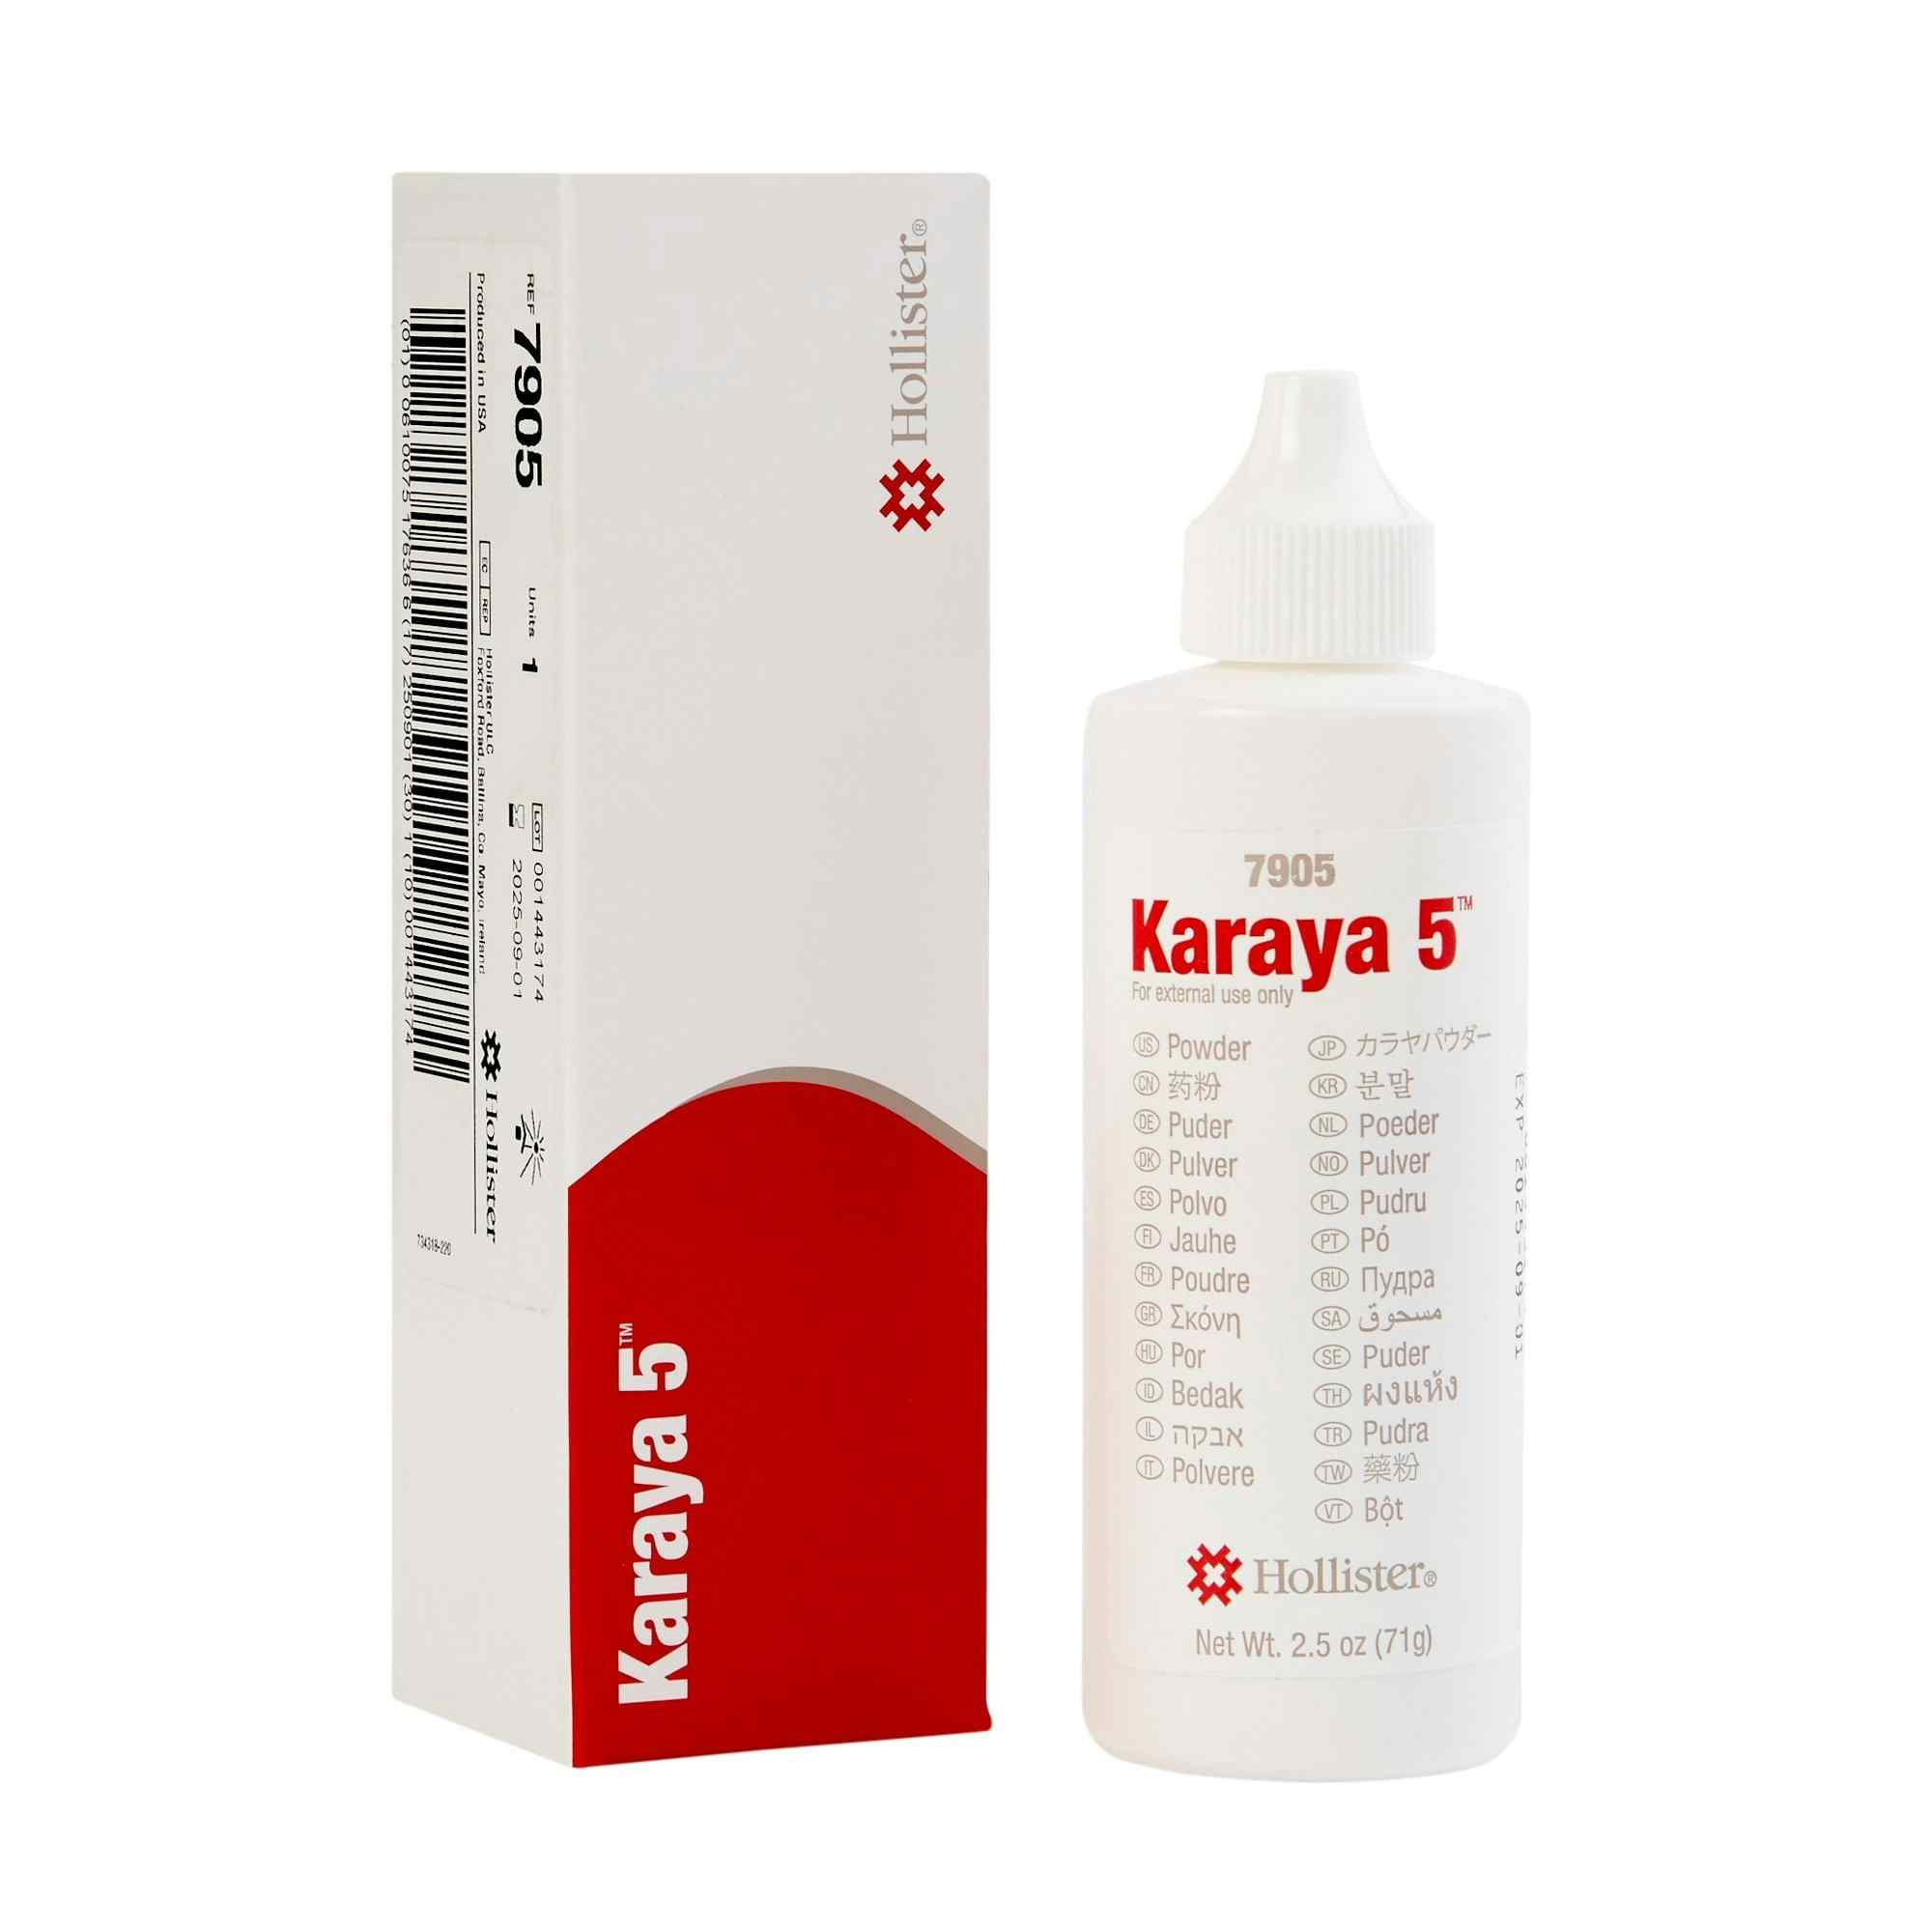 Karaya 5 Ostomy Barrier Powder, 2.5 oz